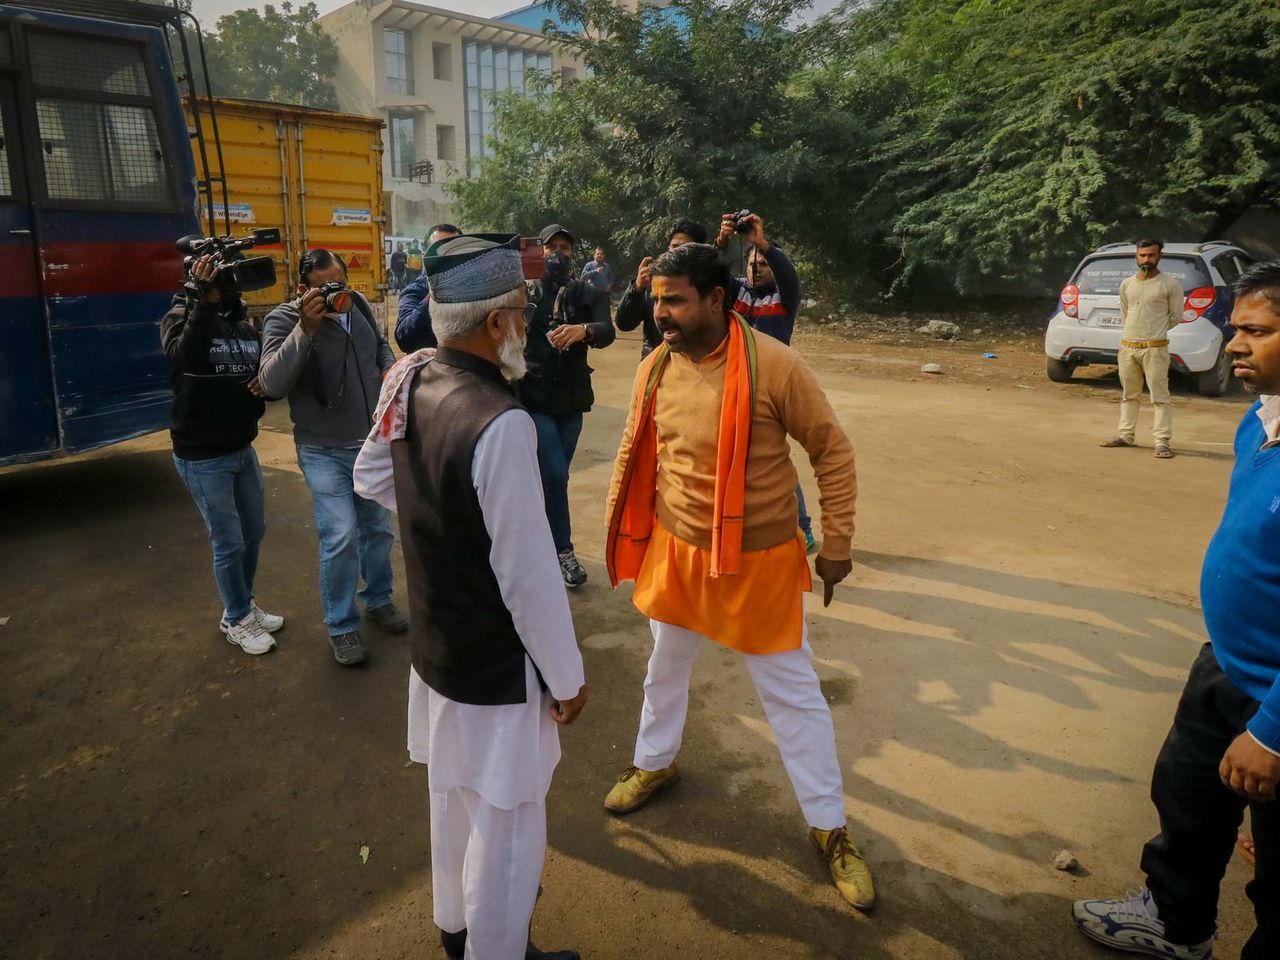 A Member of Hindu right wing heaving altercation with Maulana at Sector 37 in Gurgaon.